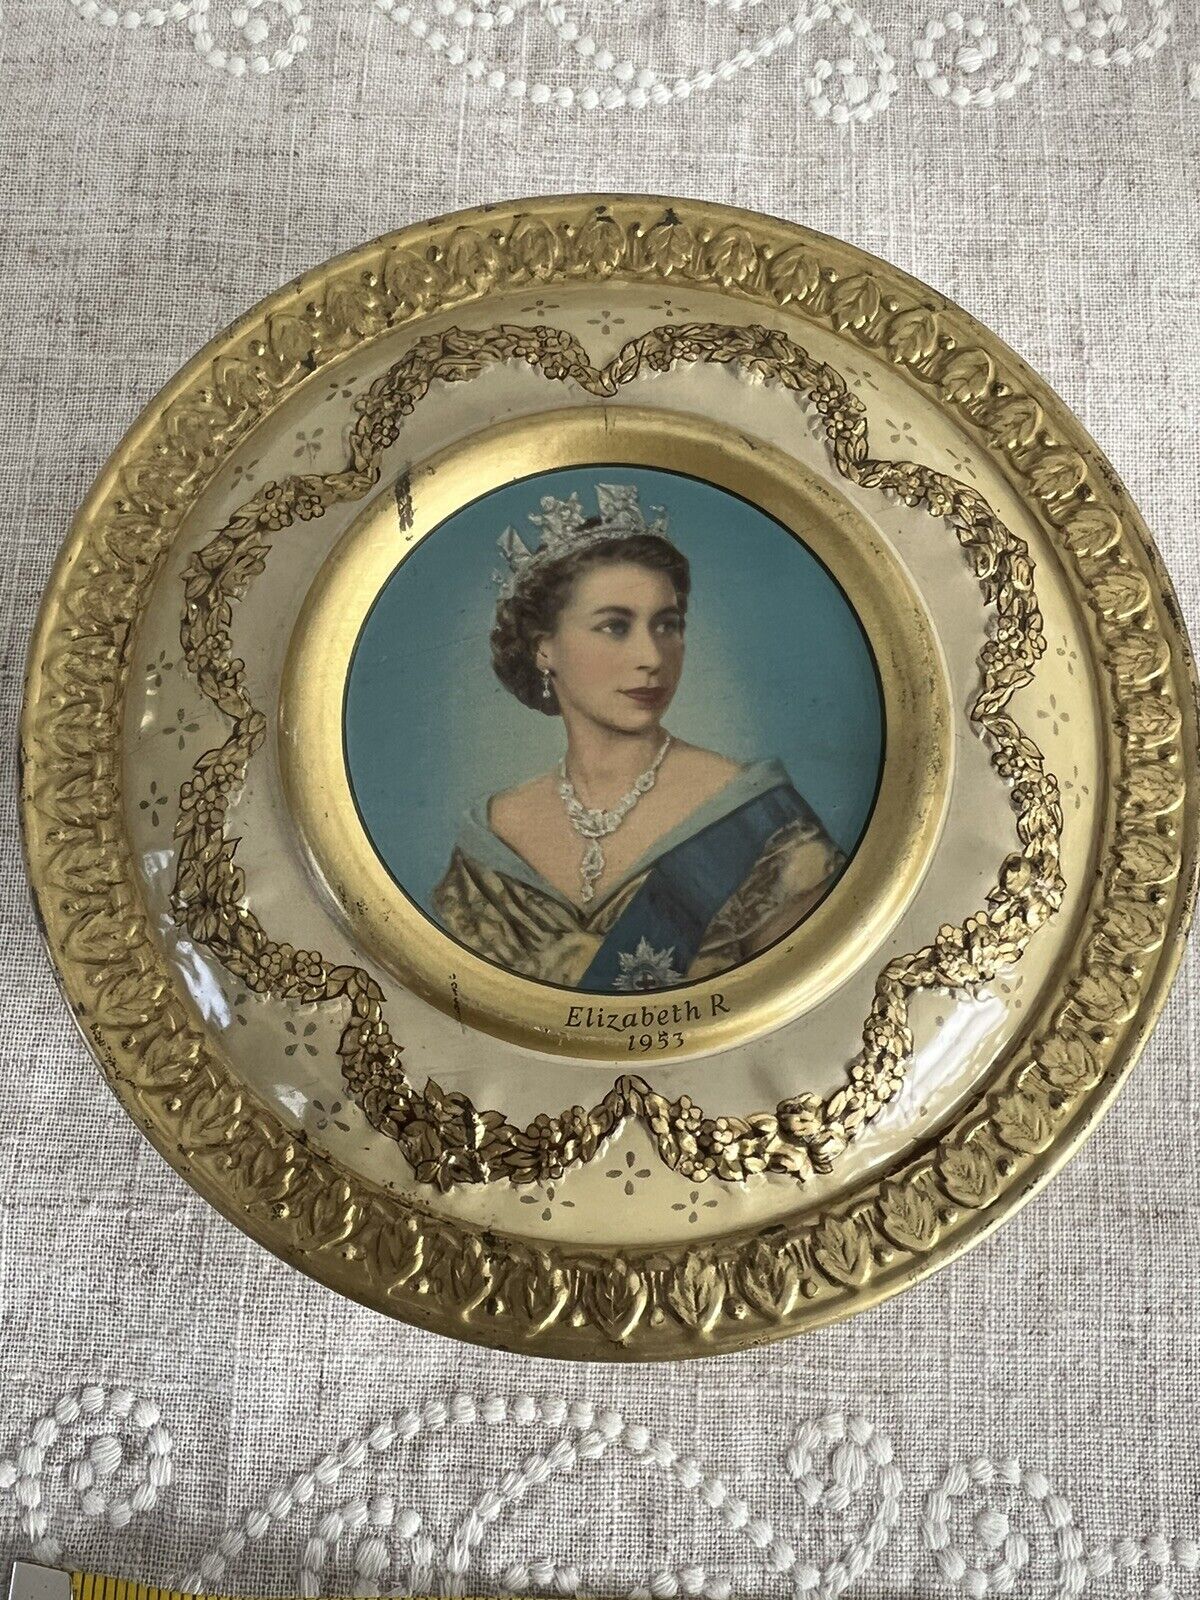 Queen Elizabeth II Coronation Tin Meltis Chocolates 1953 UK Round Gold Embossed